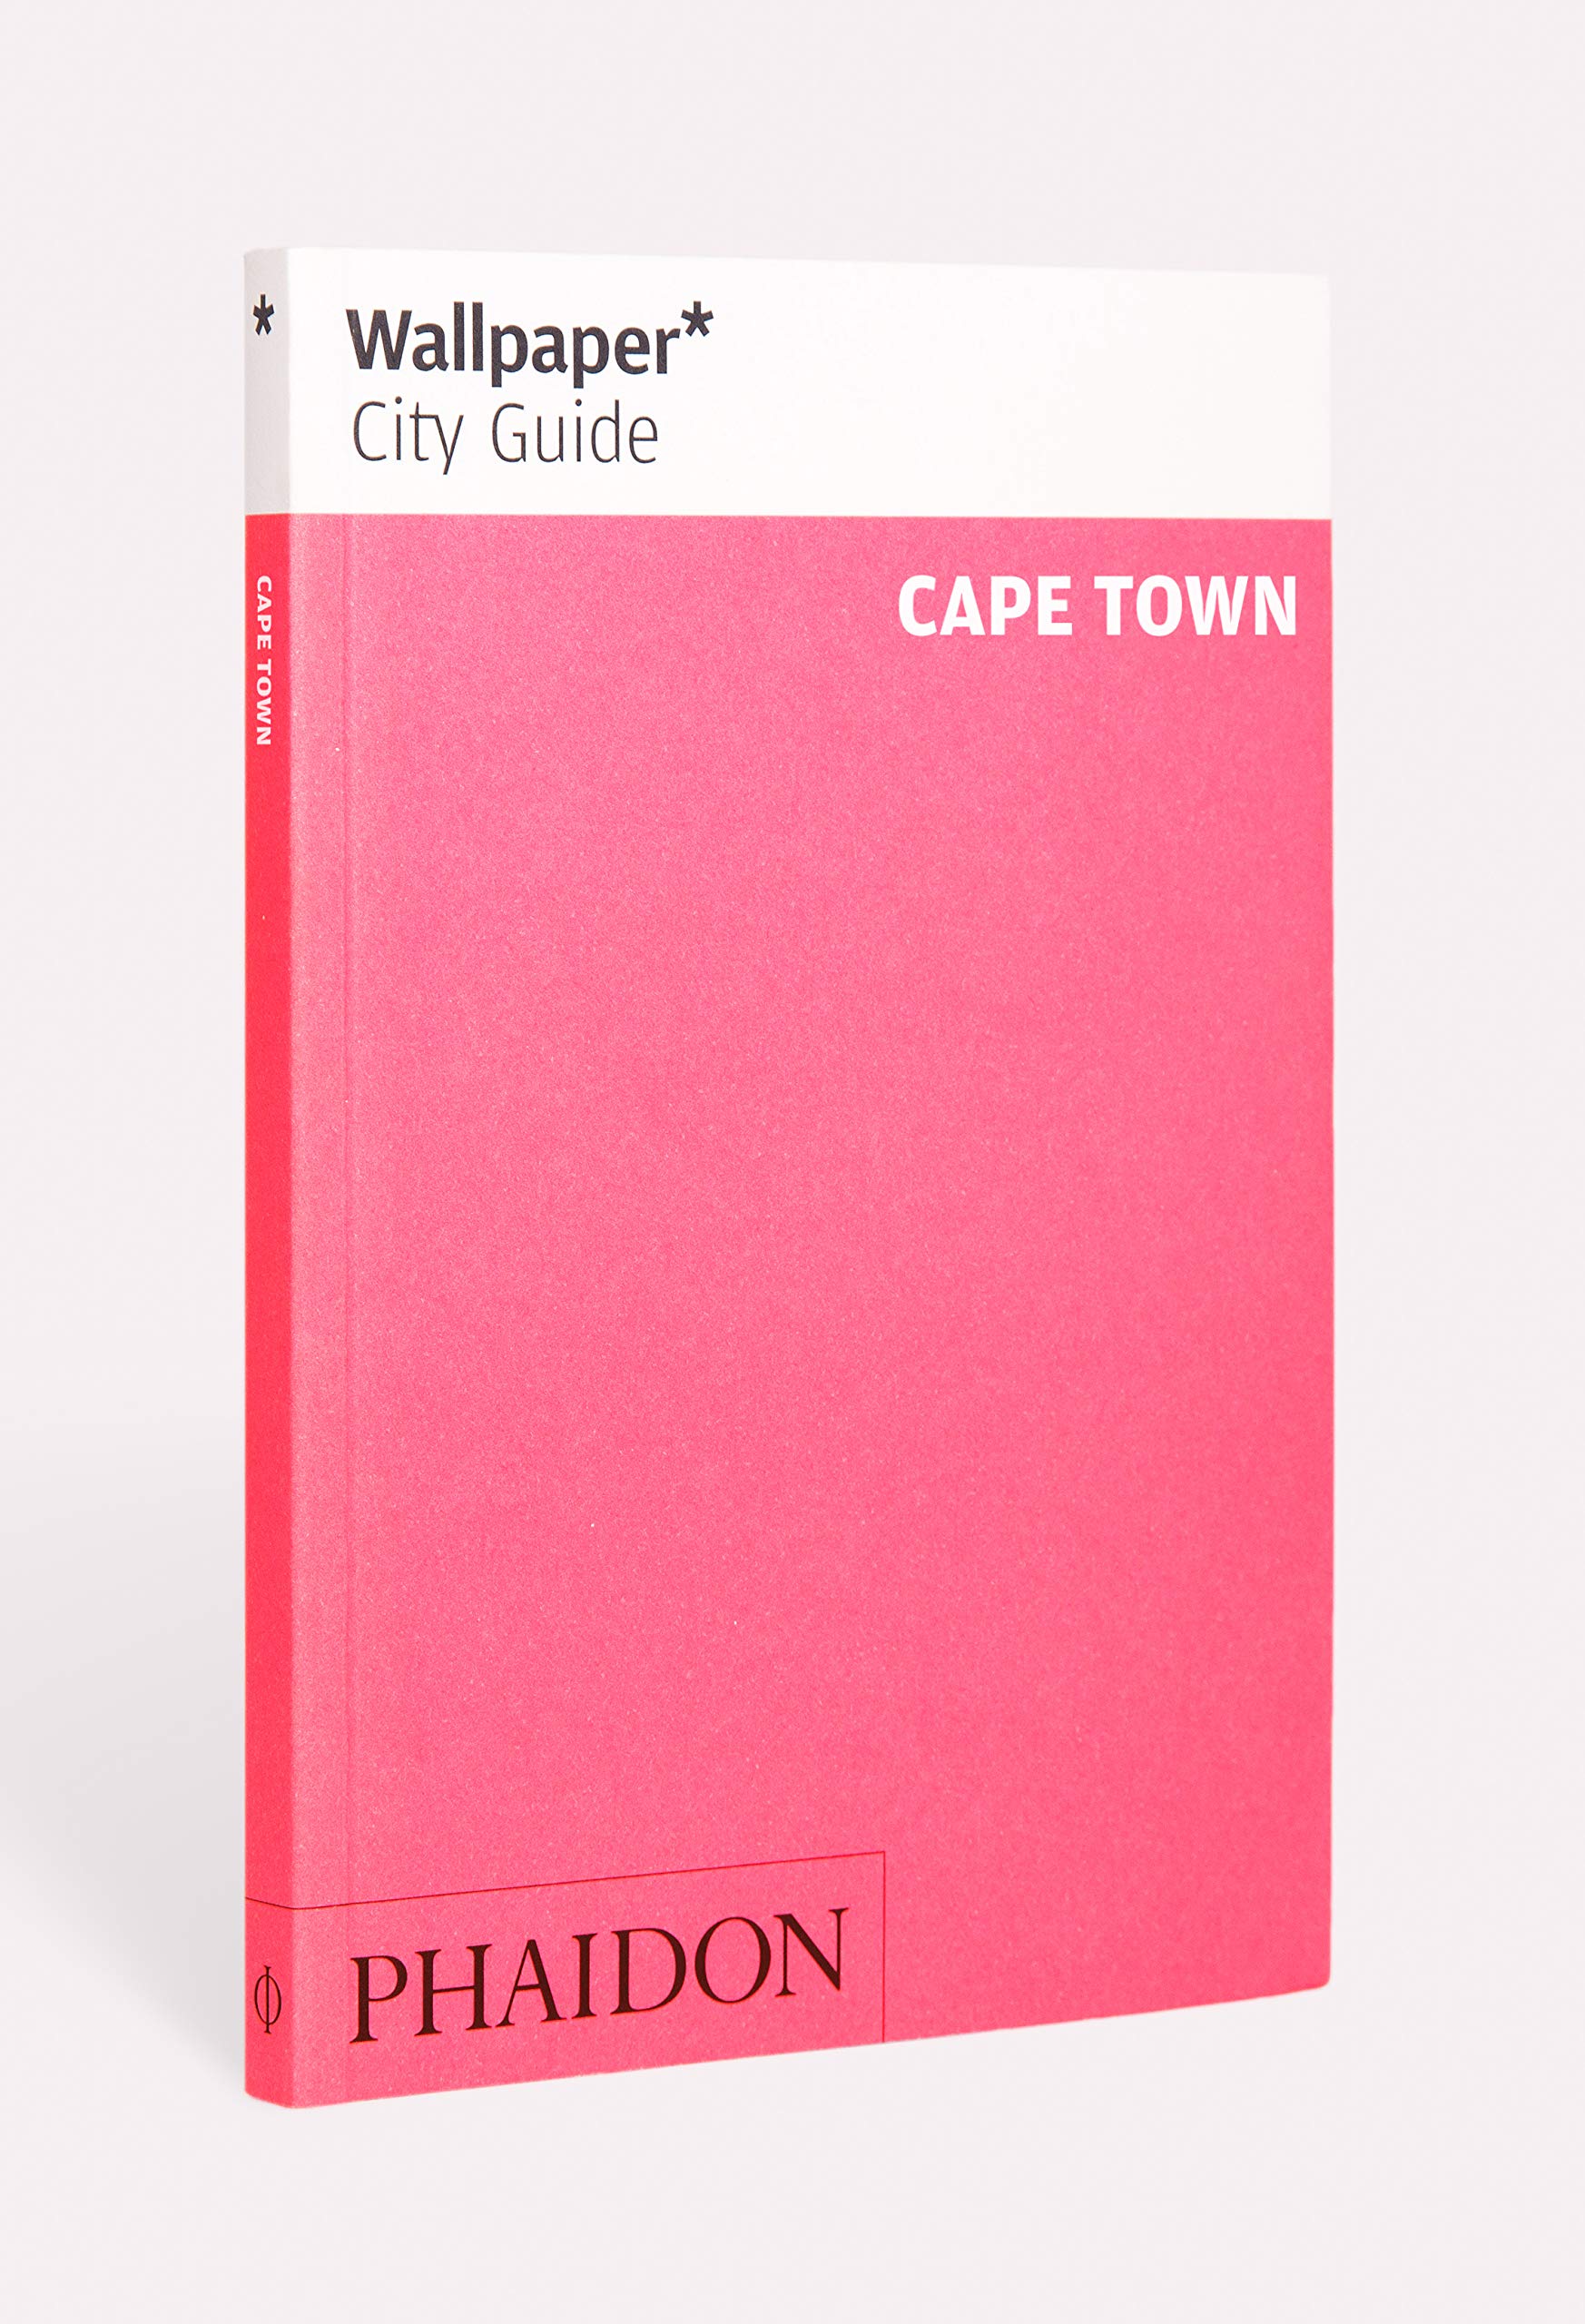 Wallpaper City Guide - Cape Town